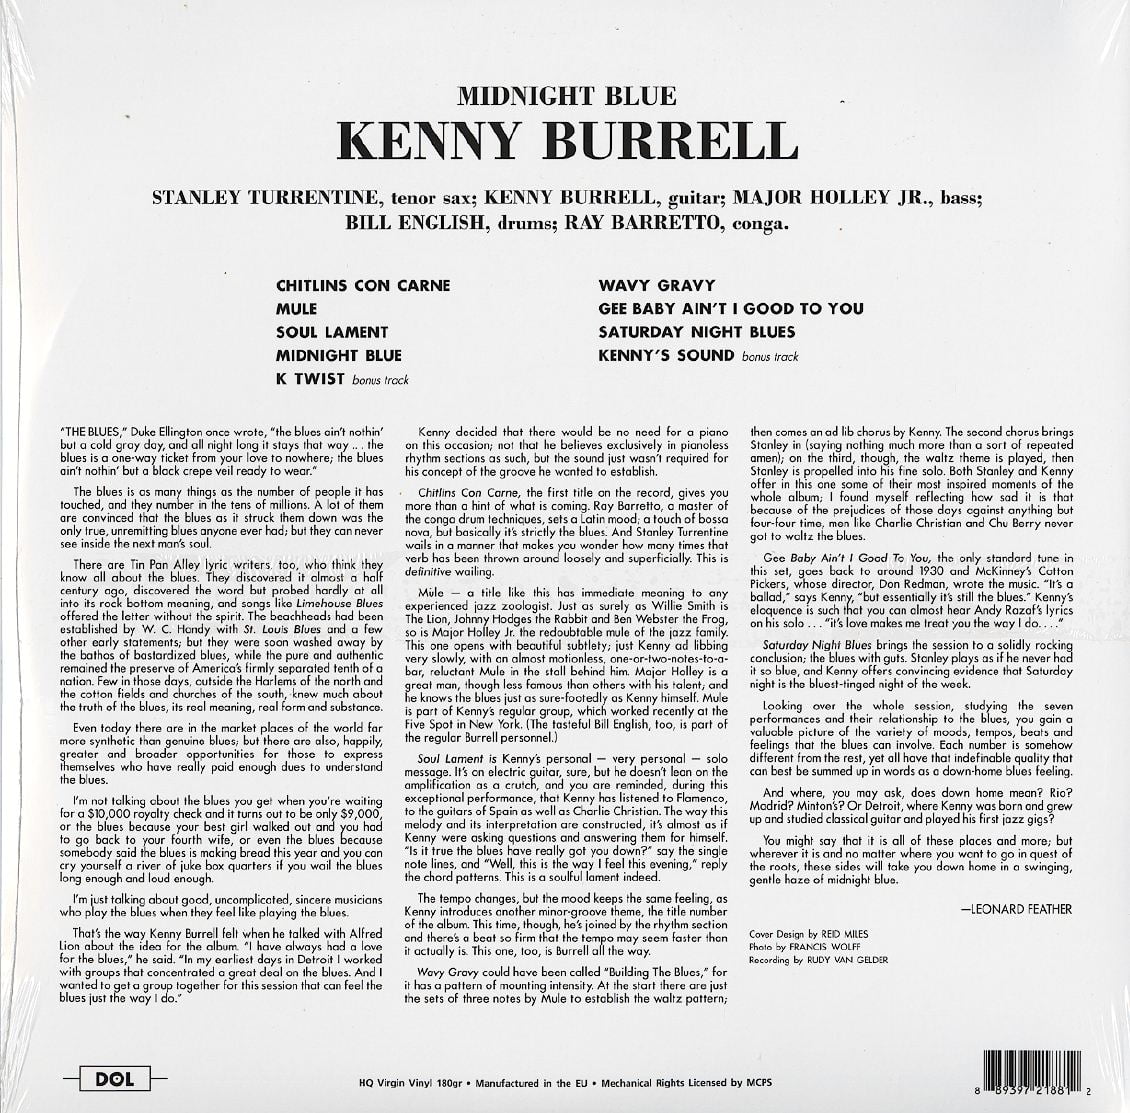 Kenny Burrell, Midnight Blue, 180 Gram Vinyl, LP, Deluxe Gatefold Edition, Reissue, Dol, 2018